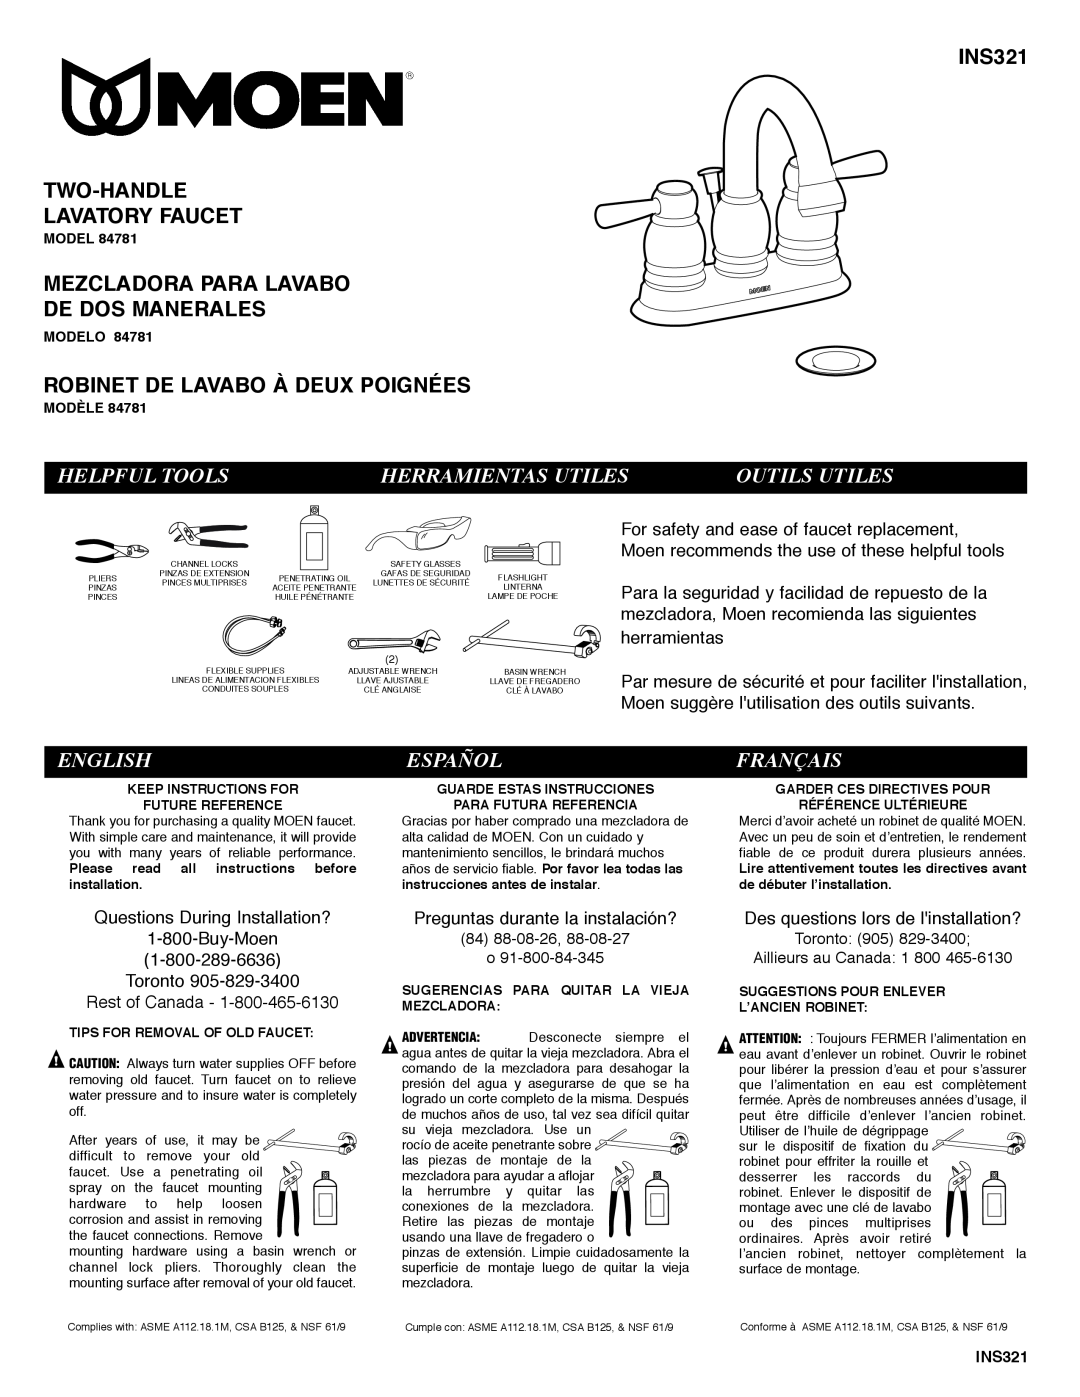 Moen 84781 manual Helpful Tools, Herramientas Utiles, Outils Utiles, Español, Français, English, INS321, Modelo 